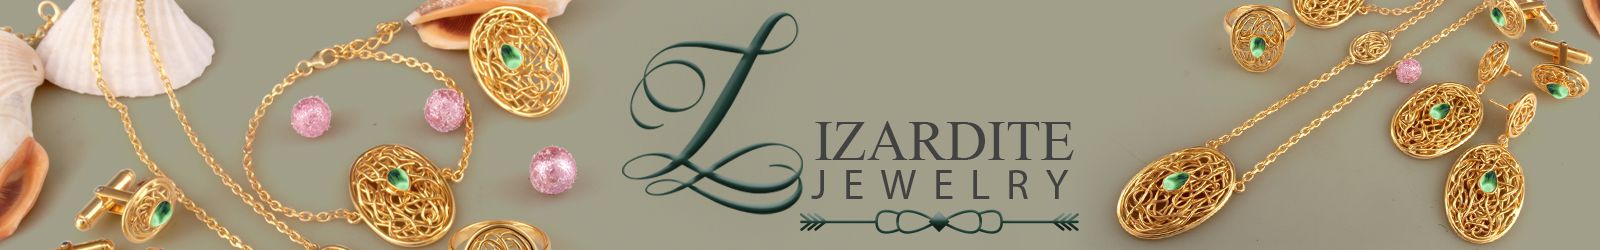 Silver Lizardite Jewelry Wholesale Supplier